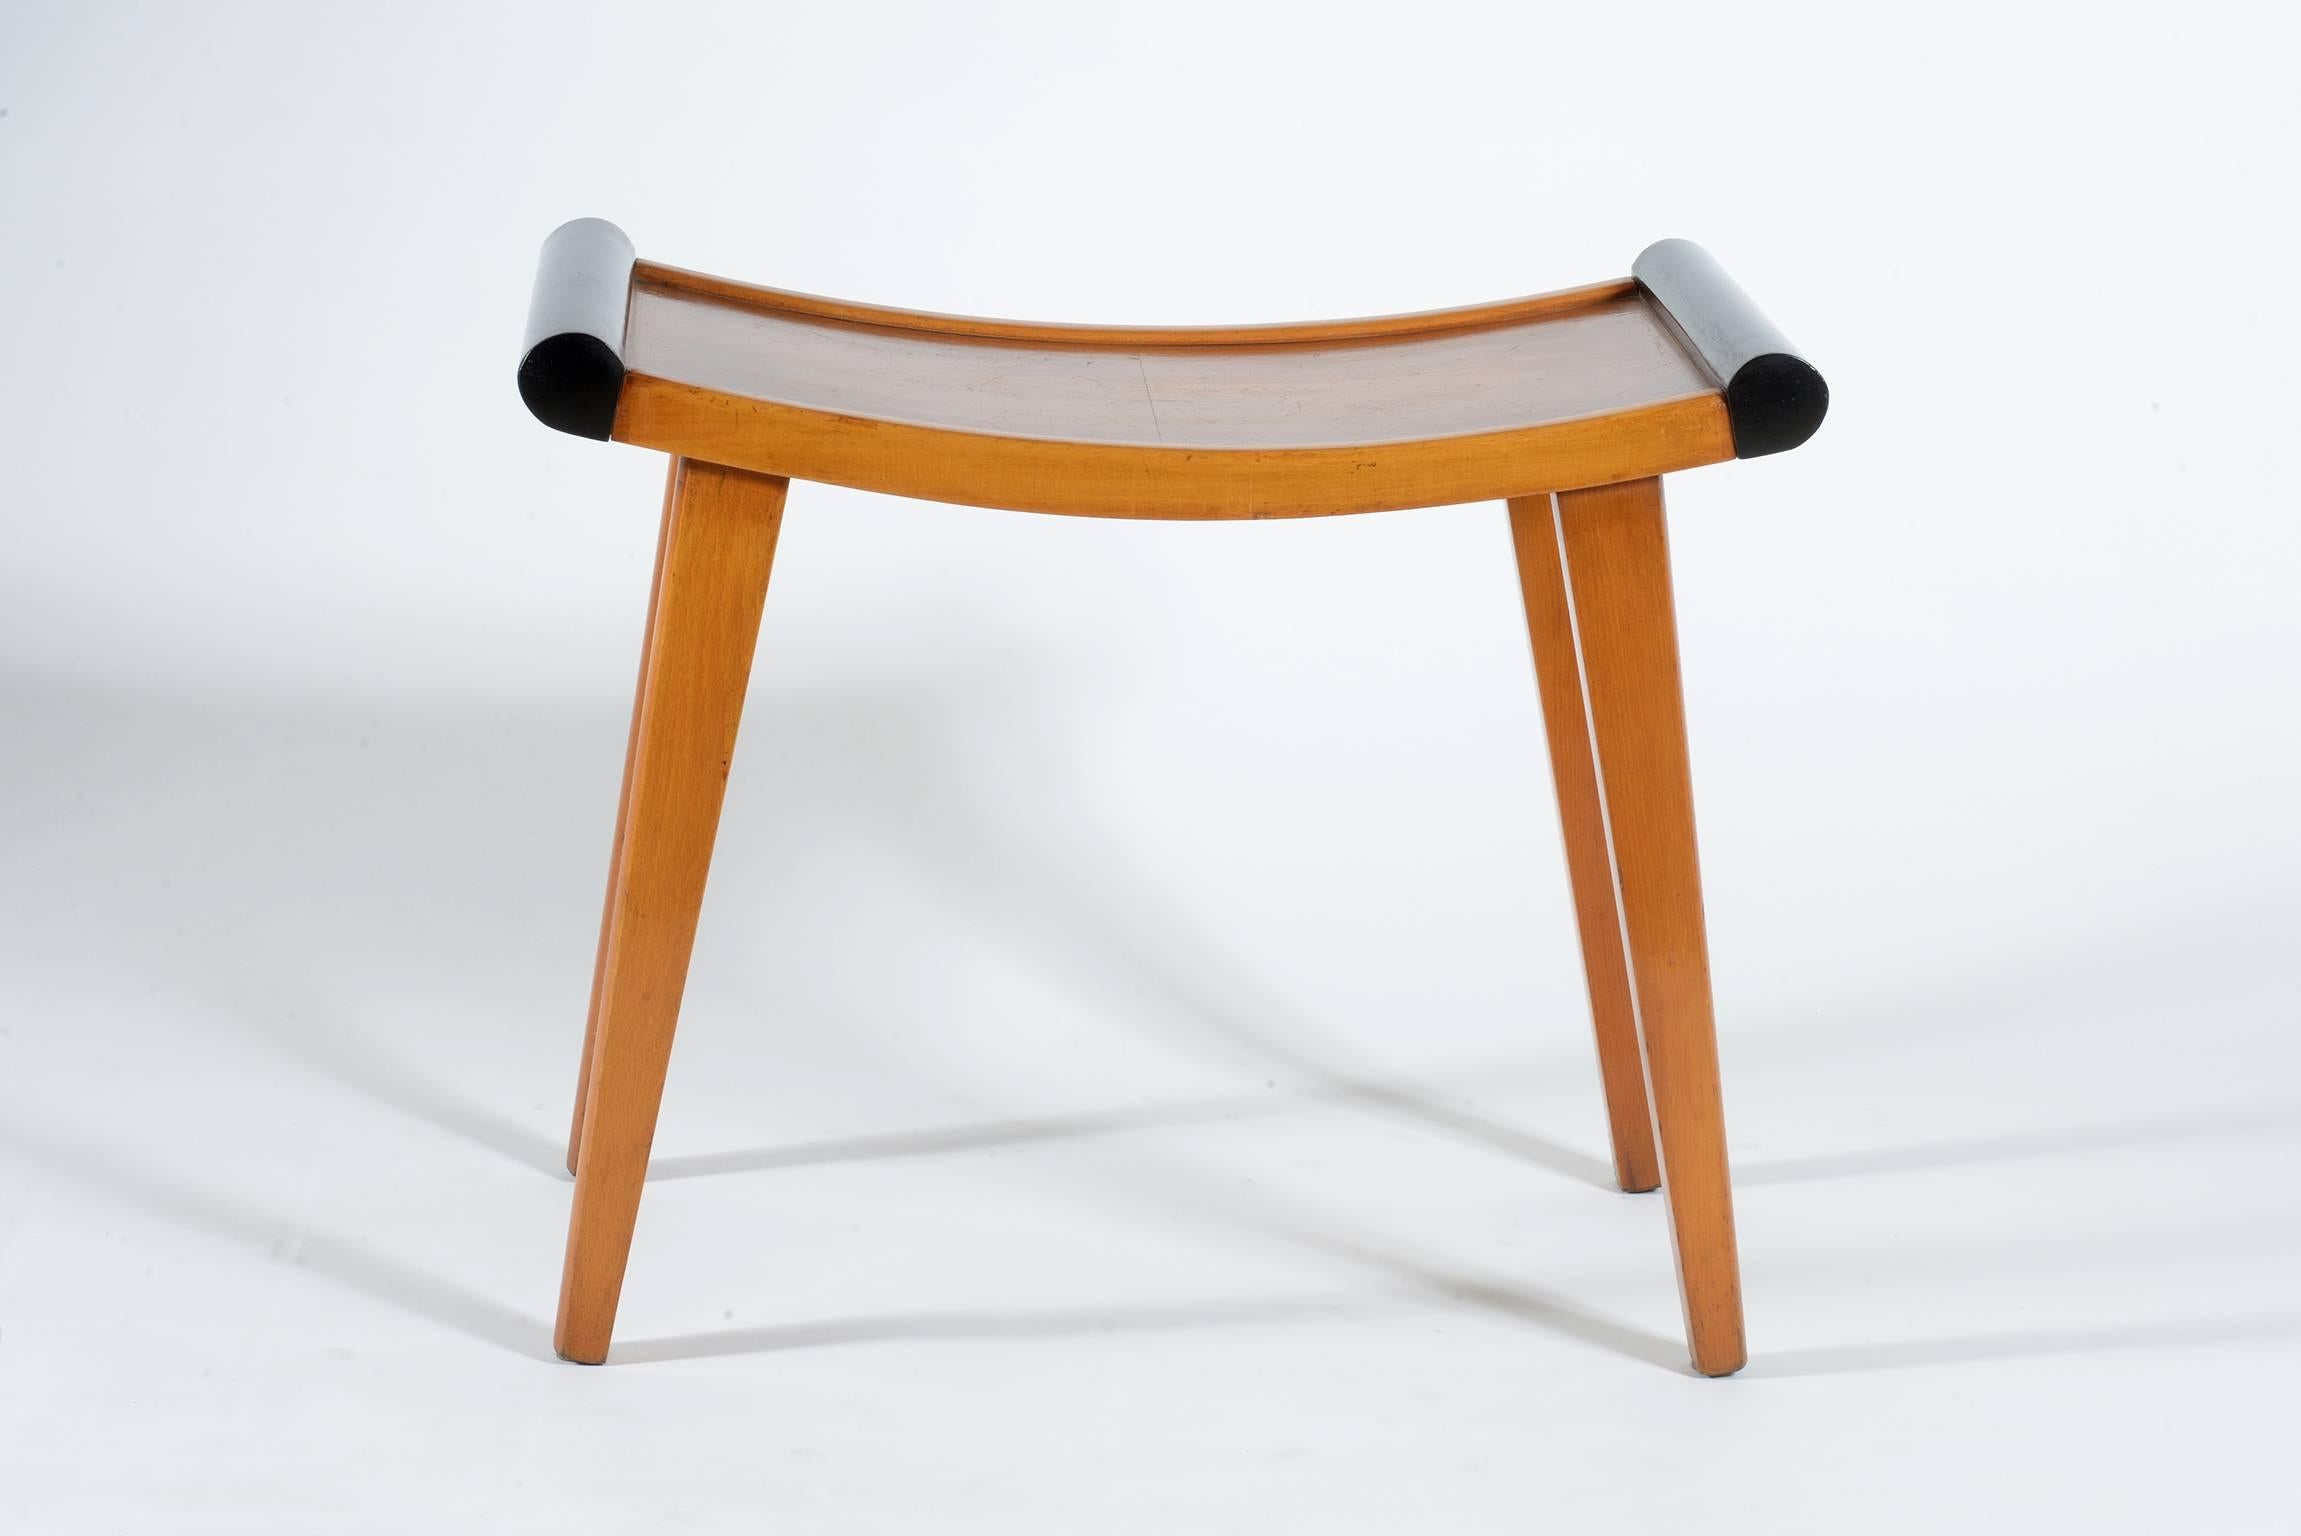 Elegant 1930's Art deco italian stools in walnut and black laquered wood.
Elegant simple shaped.